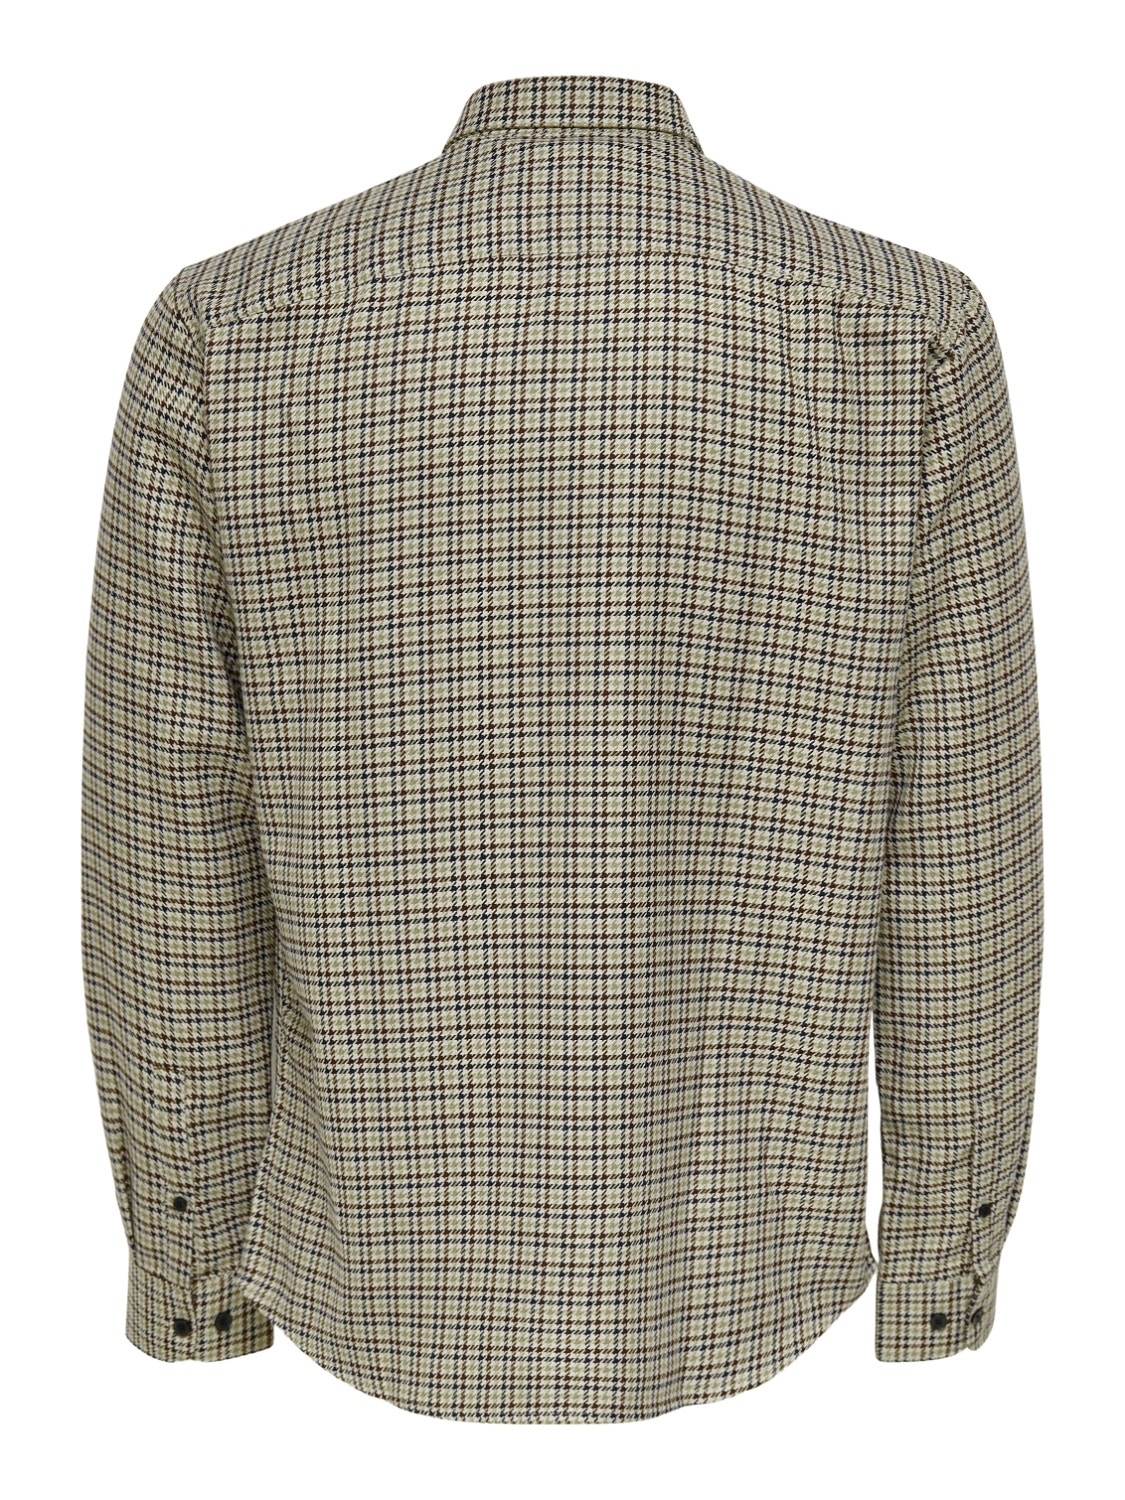 ONLY & SONS Camisas Corte regular Cuello de camisa -Silver Lining - 22023025